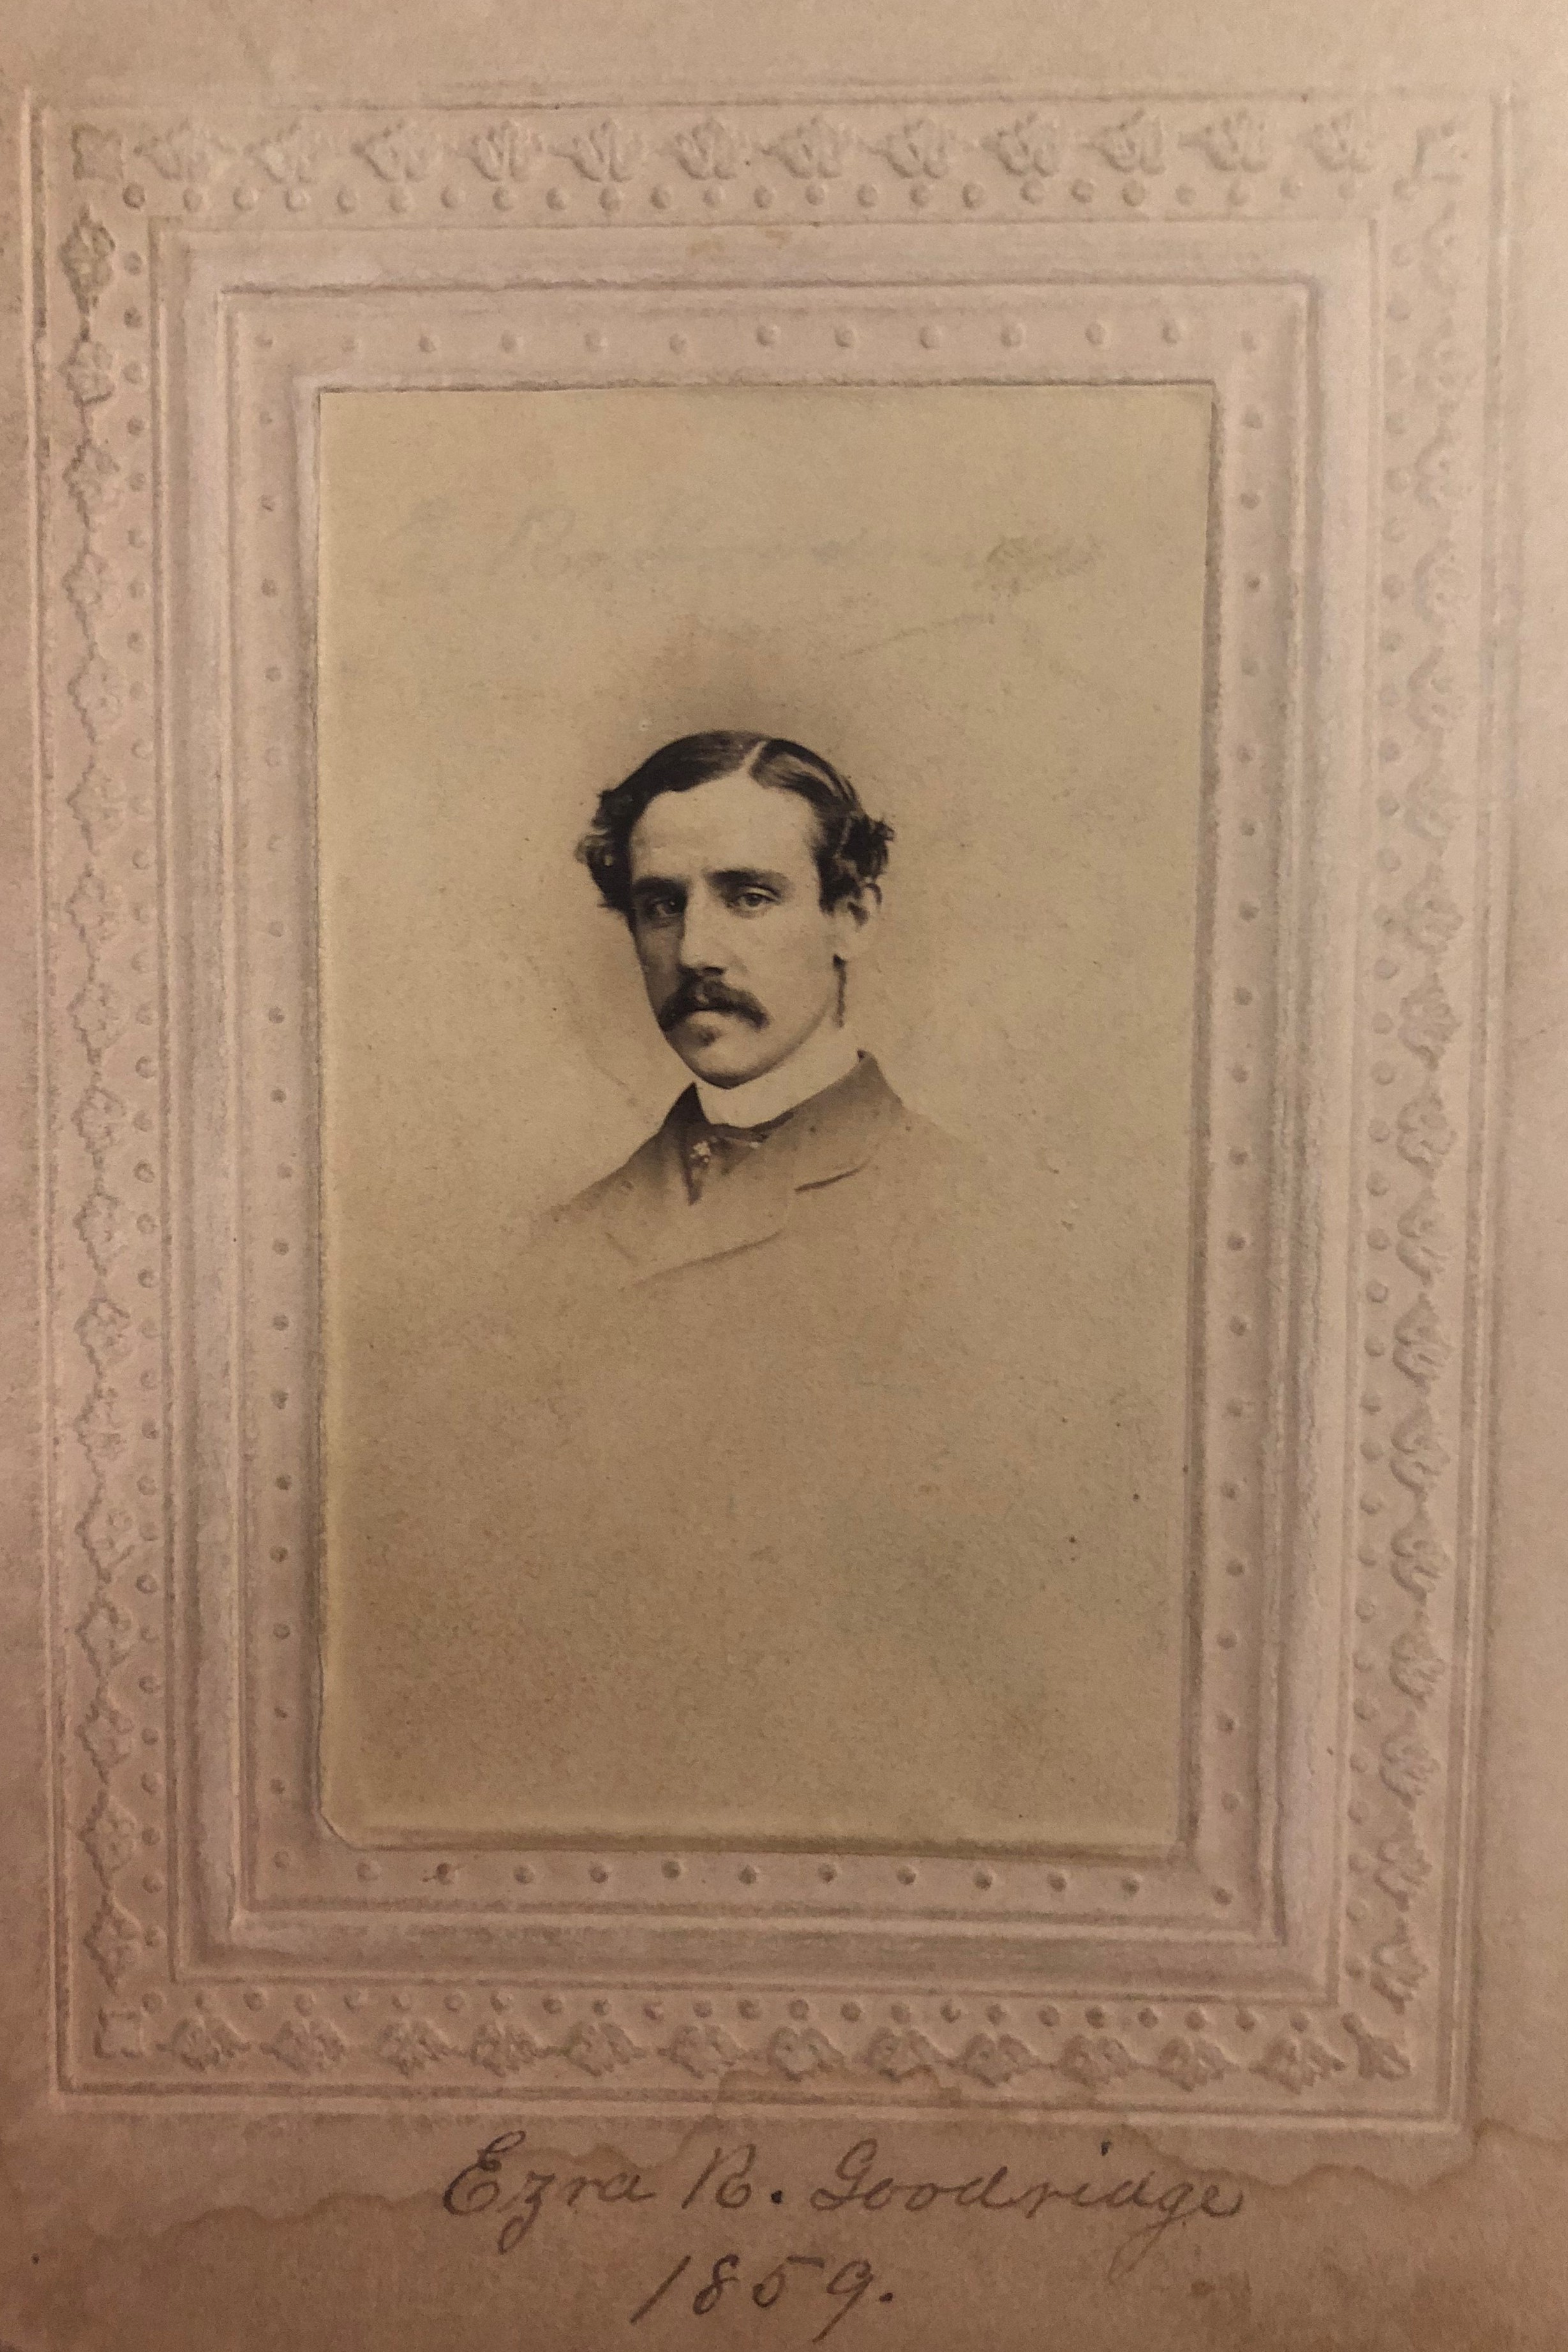 Member portrait of Ezra R. Goodridge